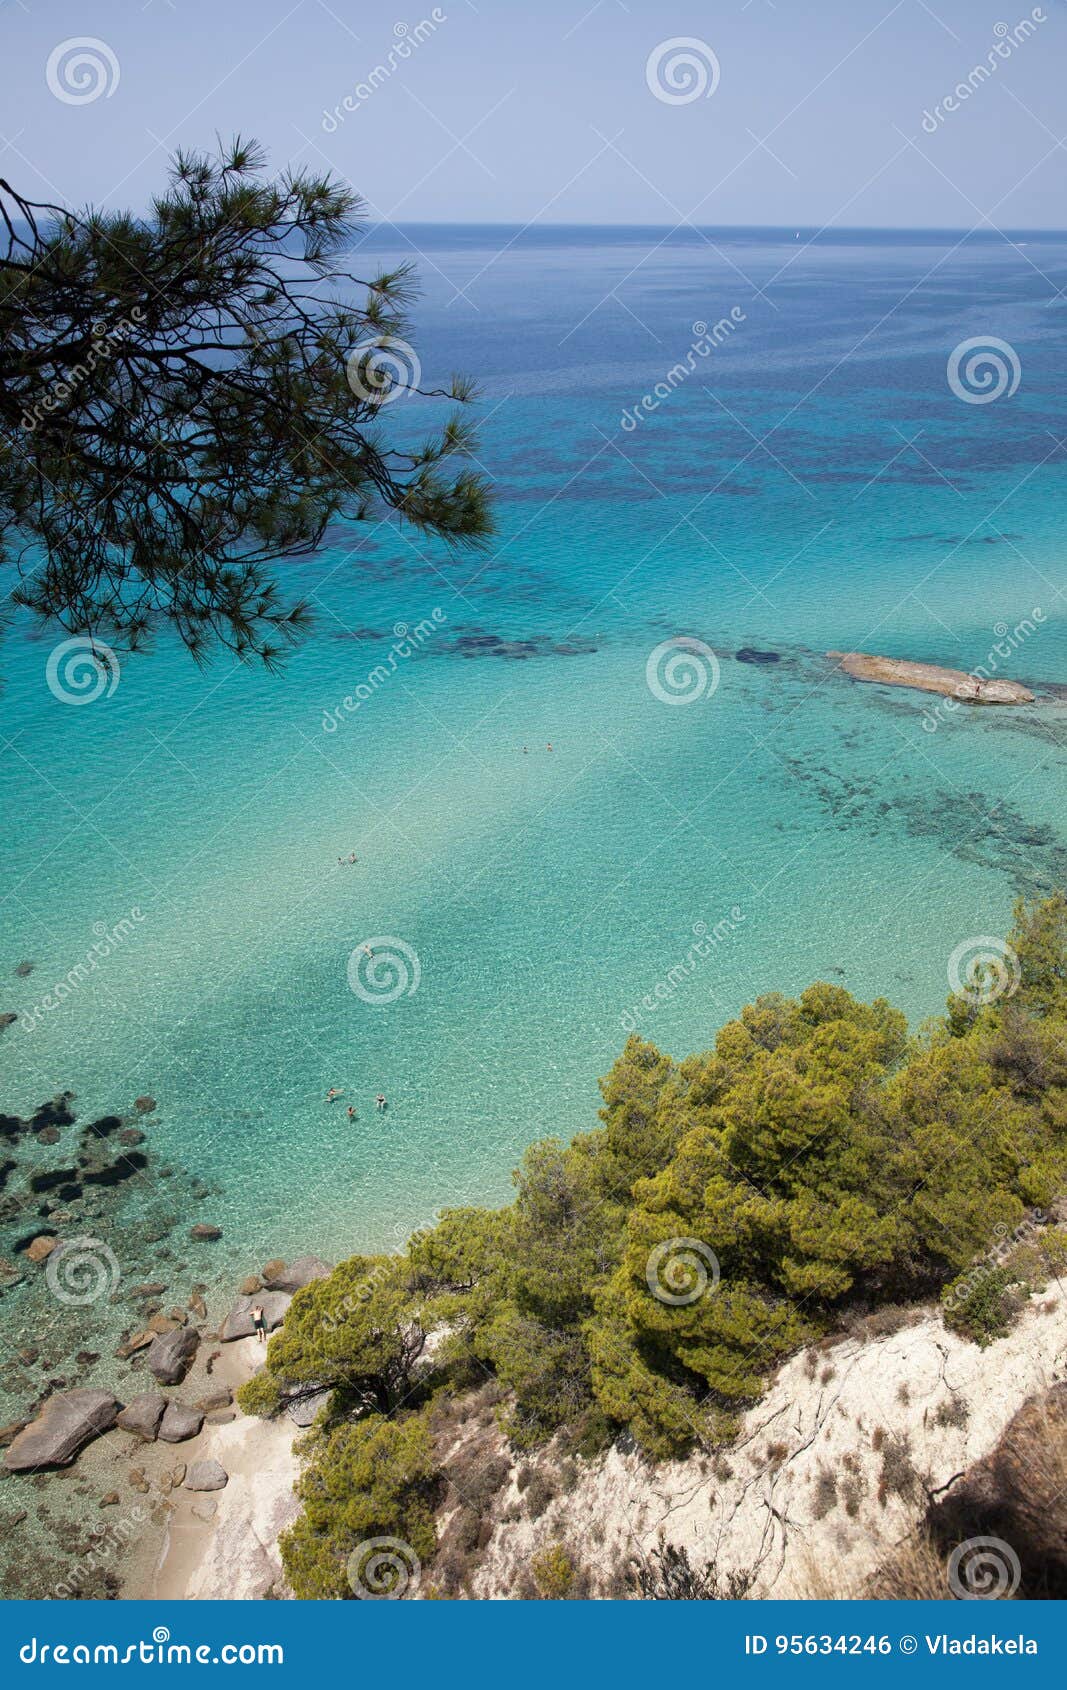 beautiful greece mediterranean sea